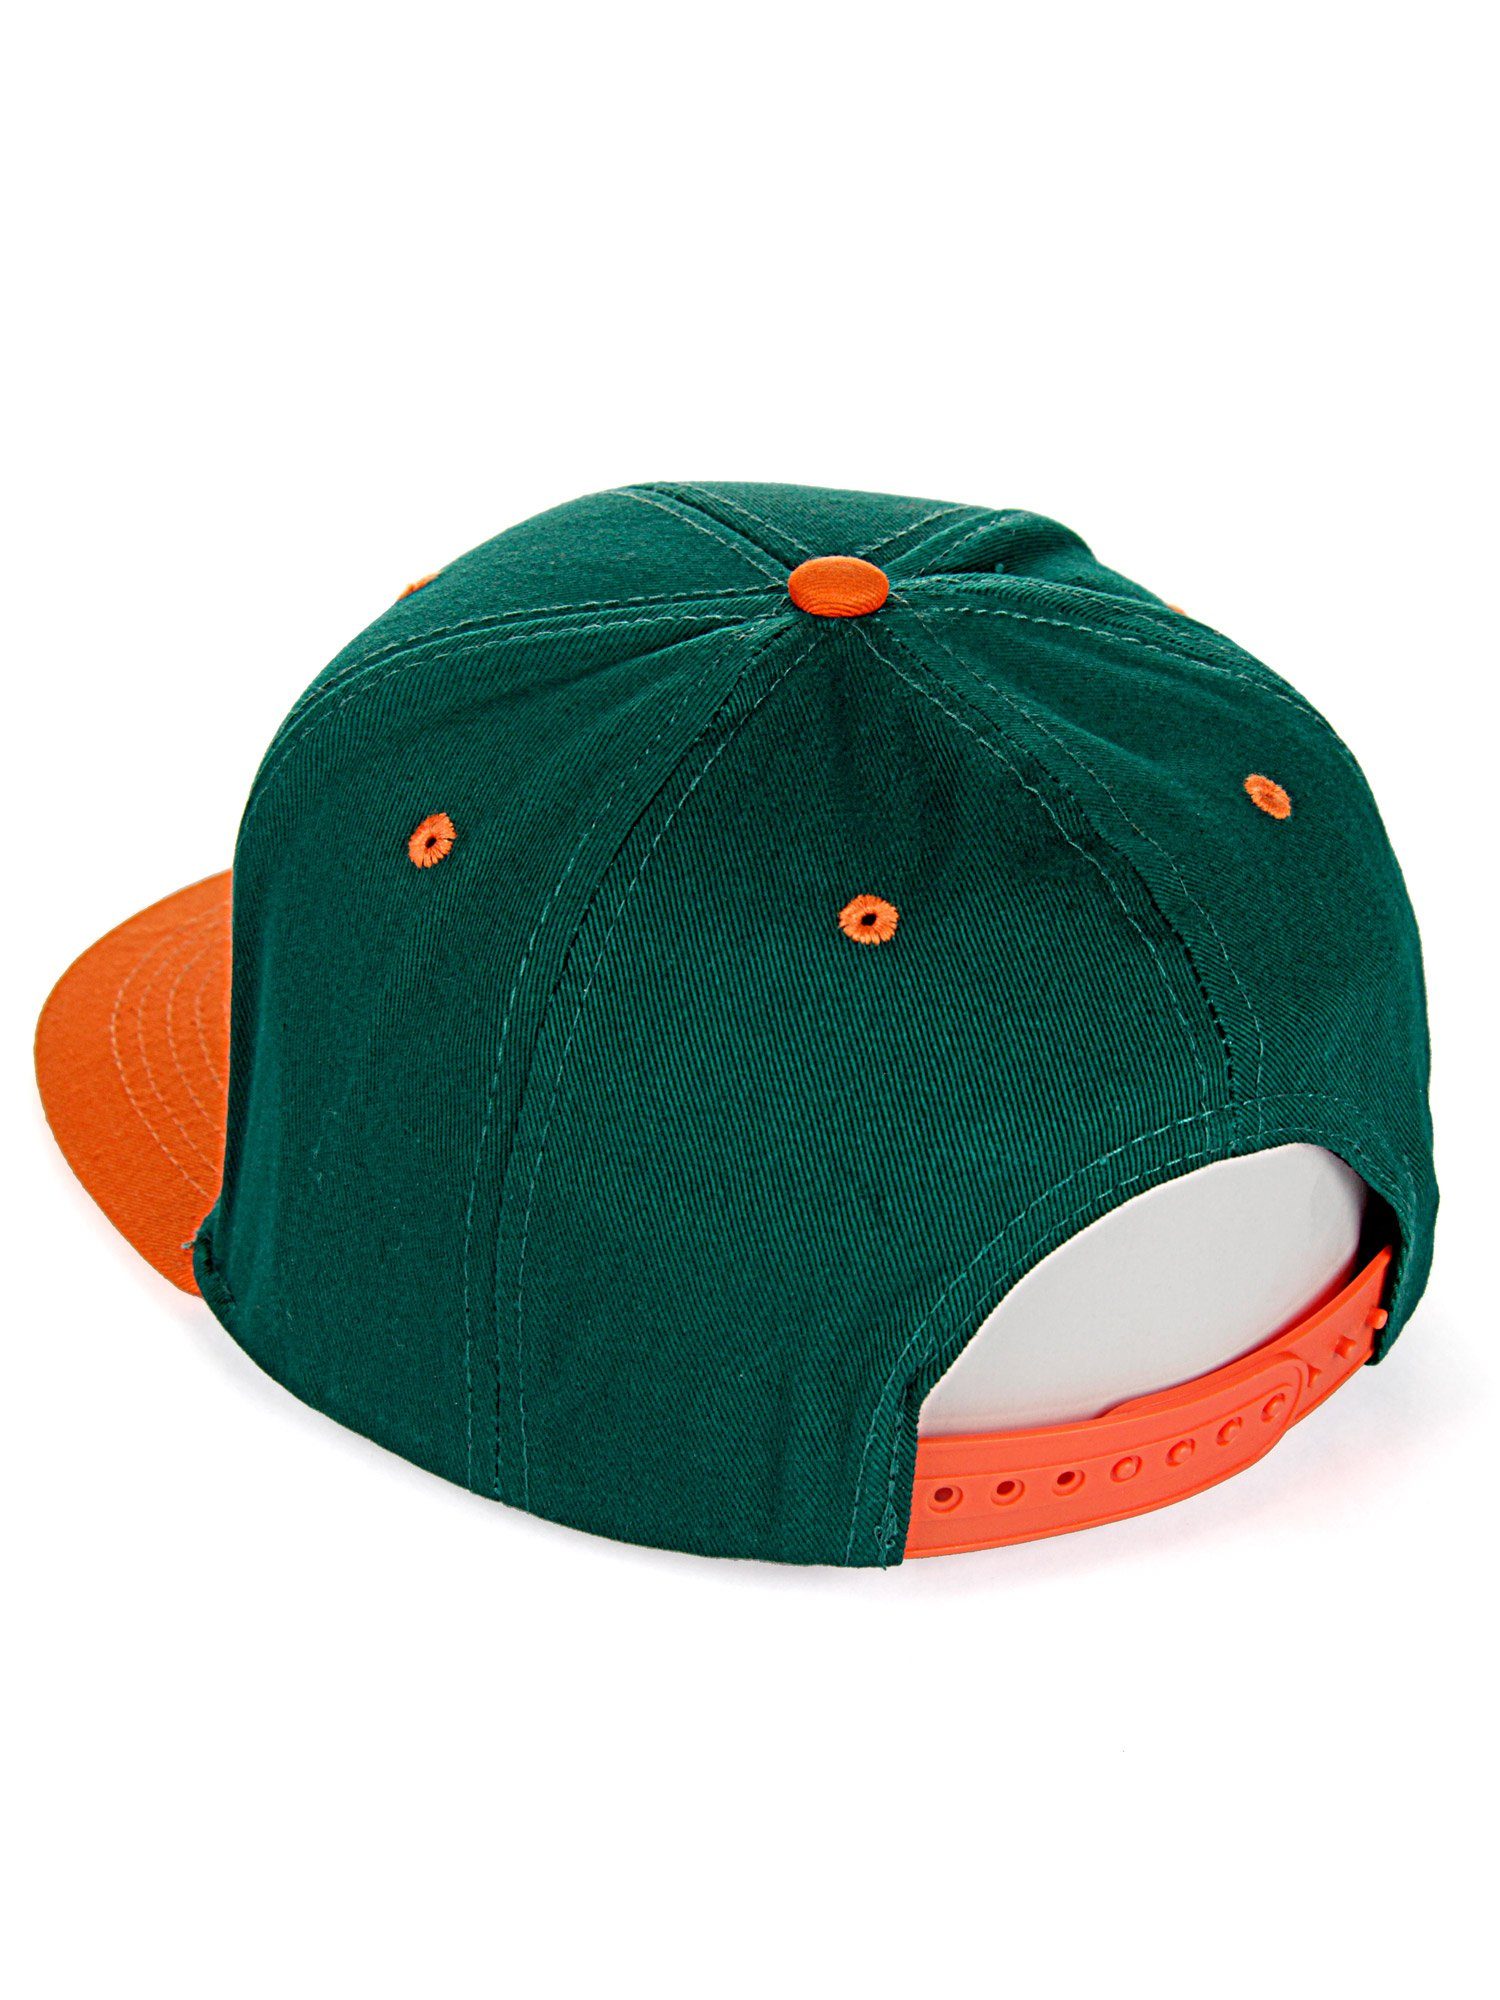 Baseball Sittingbourne Schirm Cap RedBridge kontrastfarbigem mit grün-orange